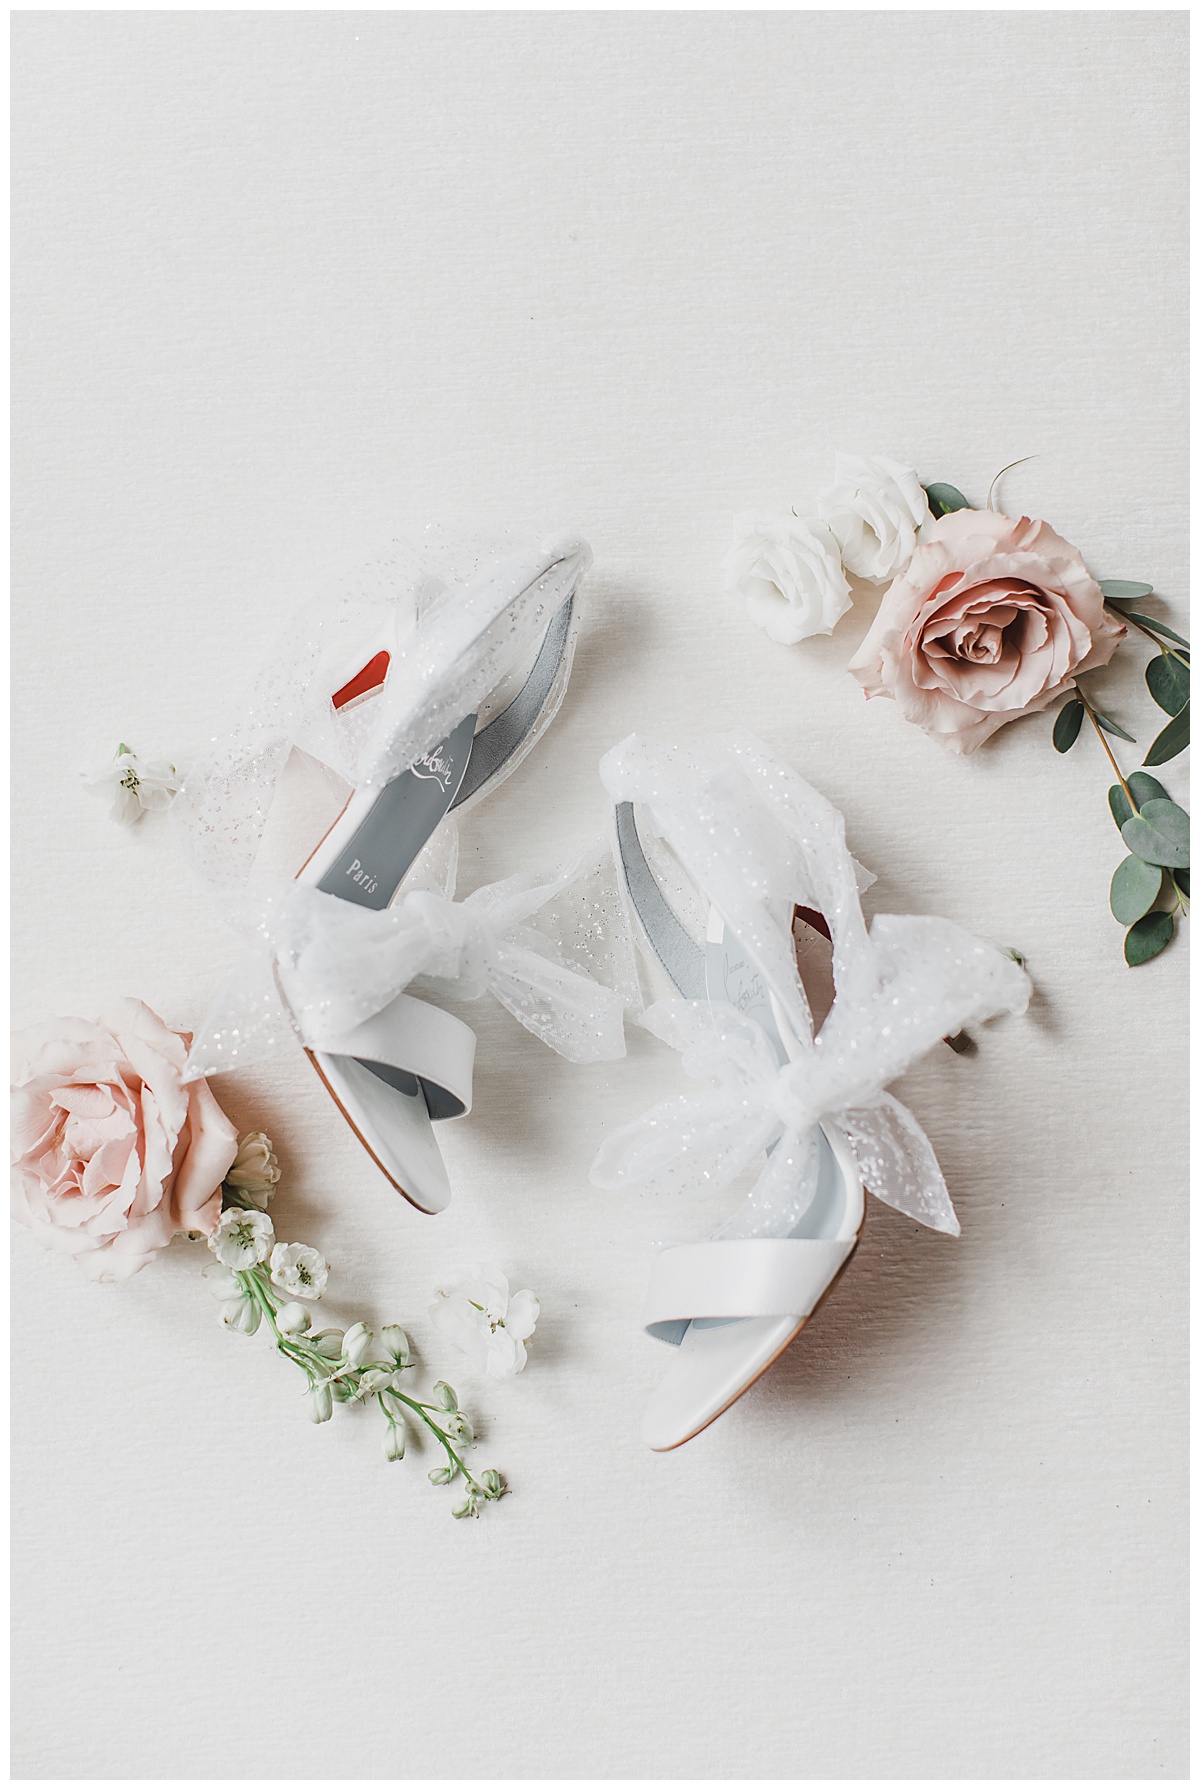 Louboutin Wedding Shoes 